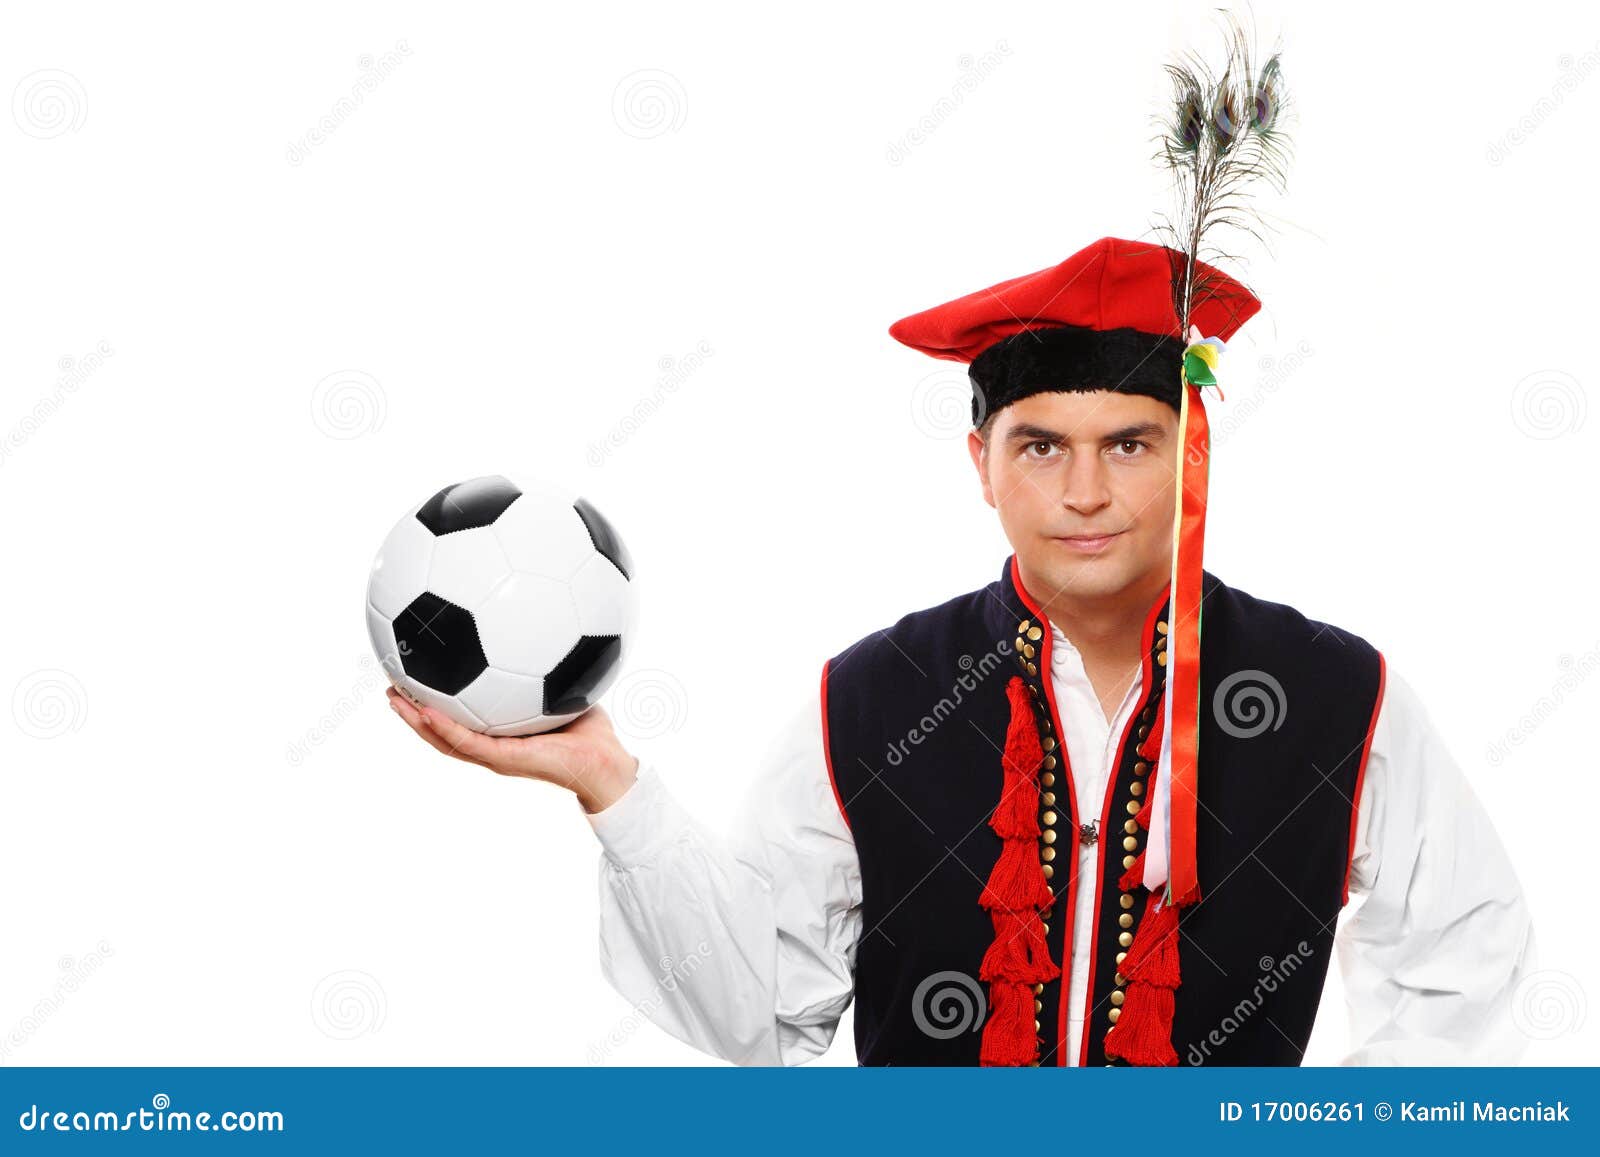 polish-man-traditional-outfit-football-17006261.jpg